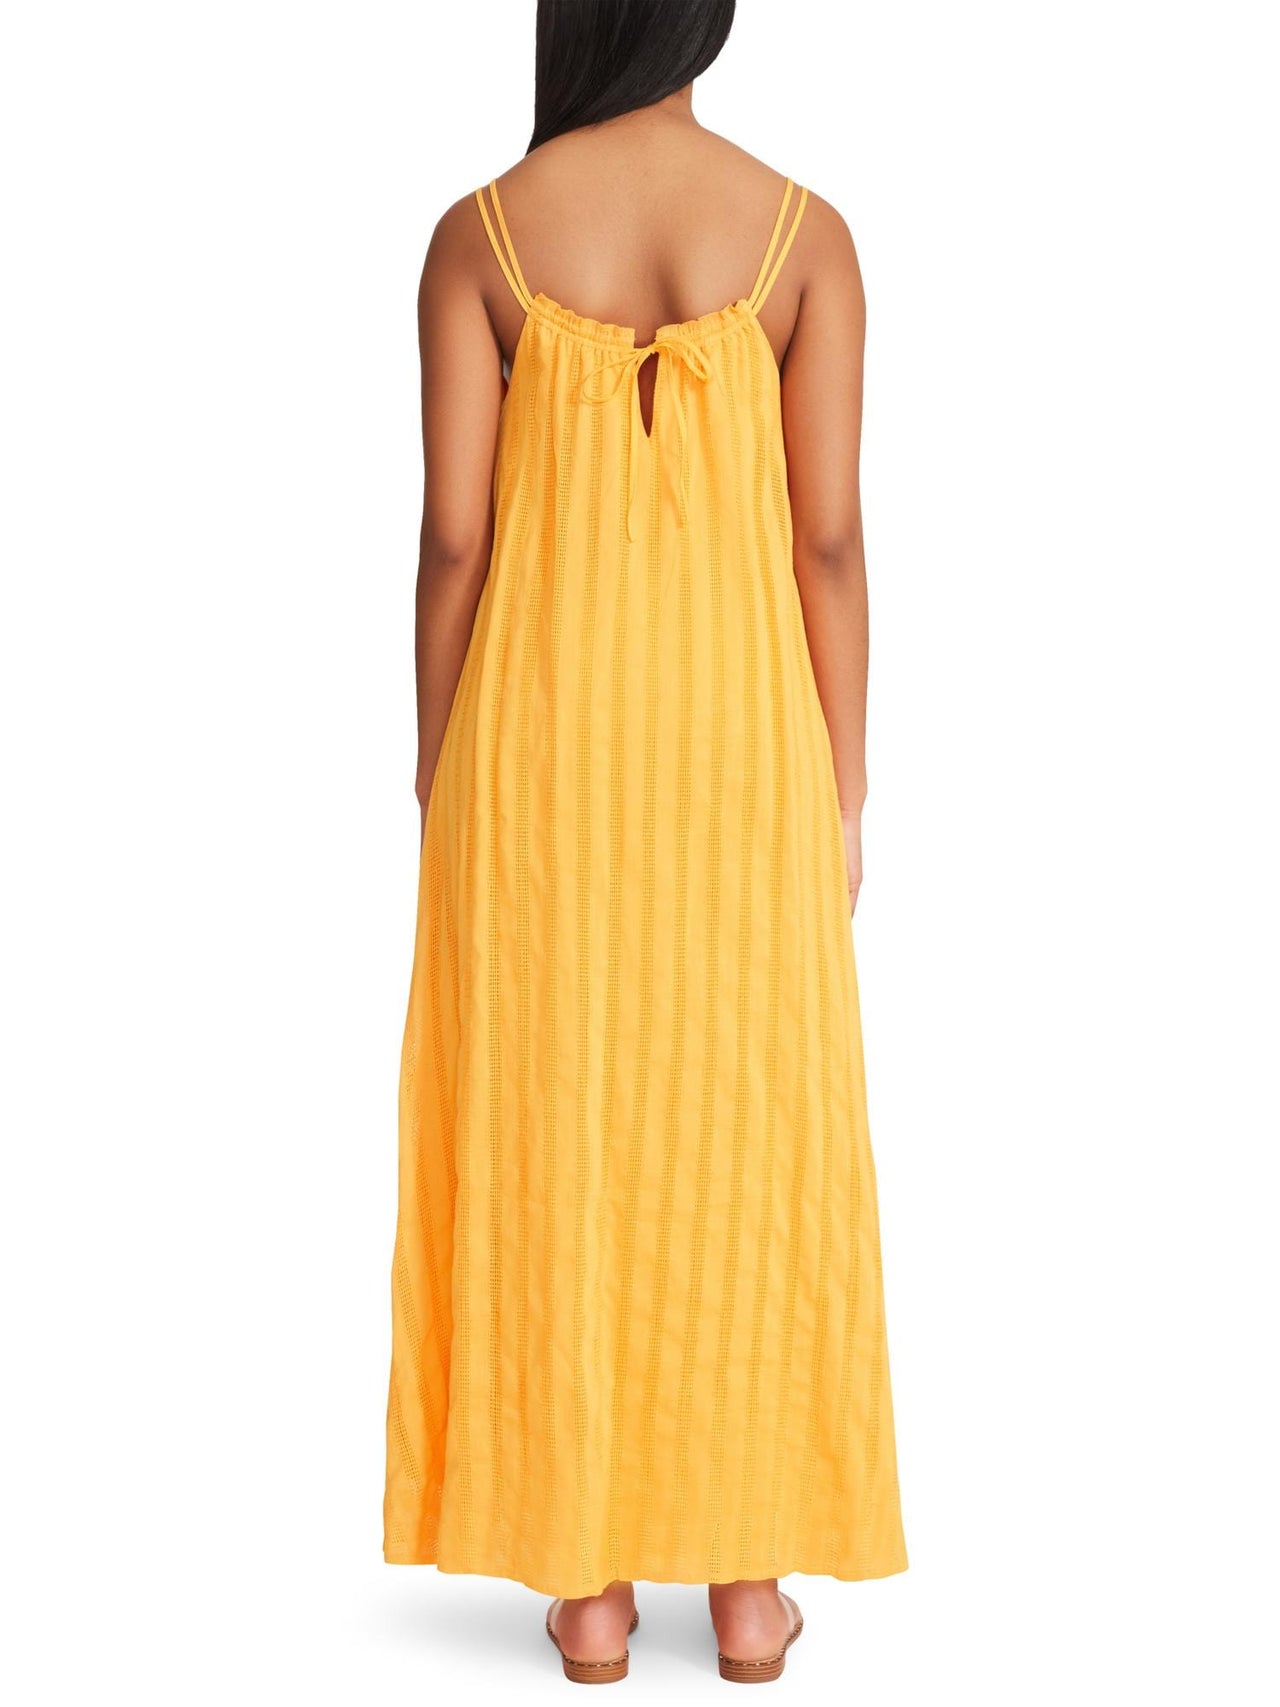 Flowget About It Maxi Dress Radiant Yellow, Dress by BB Dakota | LIT Boutique